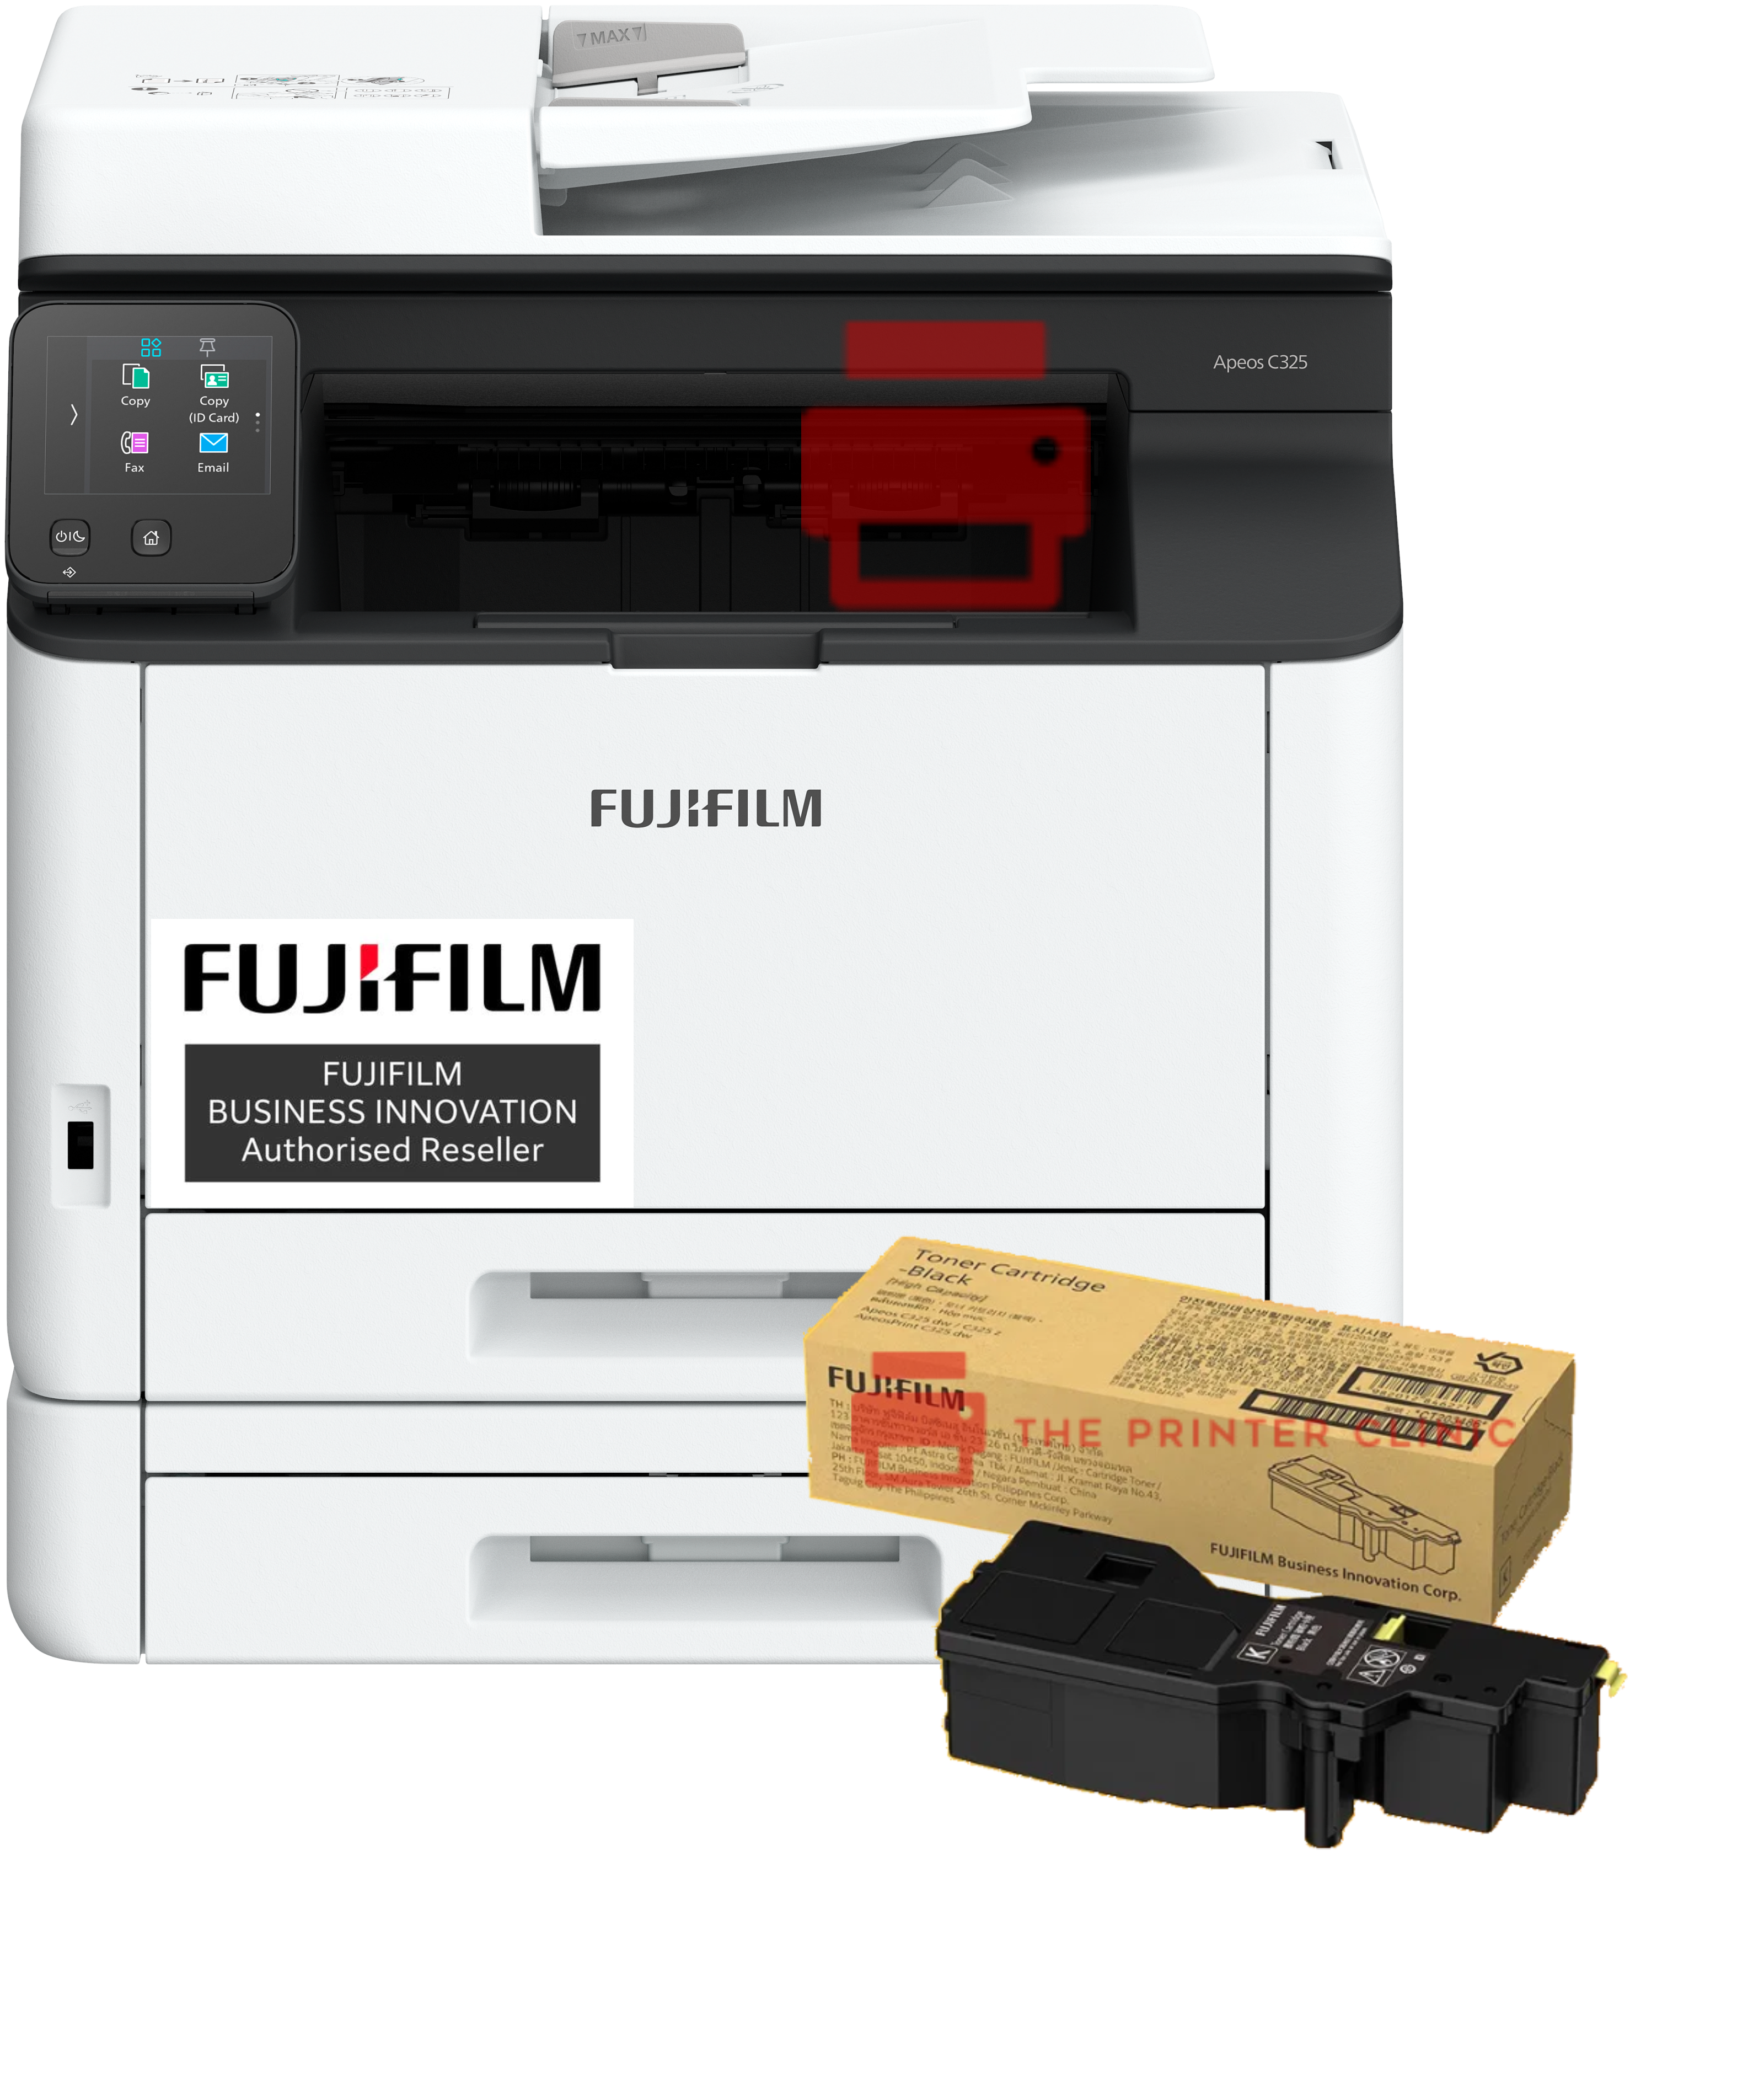 FUJIFILM Apeos C325zt Wireless A4 Colour Multifunction Printer with 2nd 250 Sheet Feeder + Bonus 6k Blk Toner & 3Y WTY